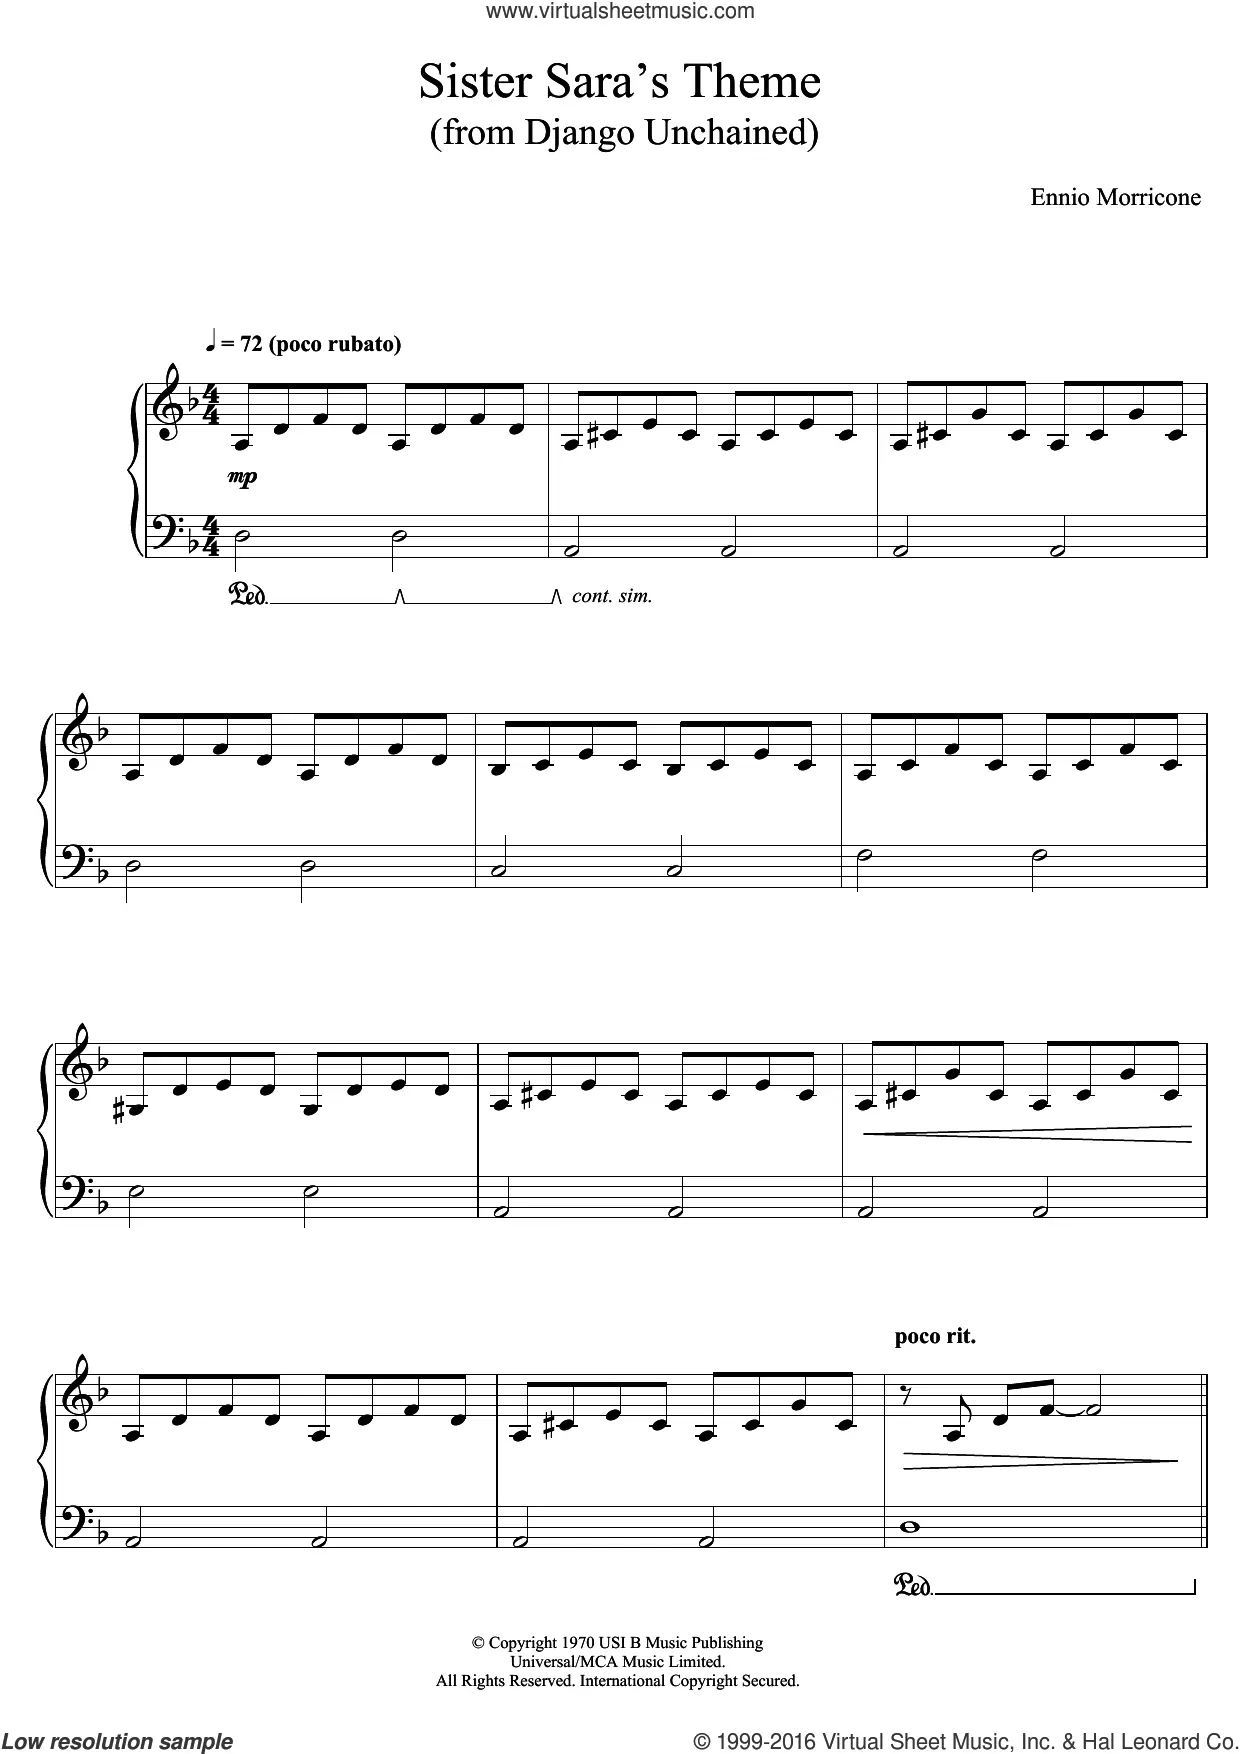 Samuel Fu Pow! Pow! Pow! - Mr. Incredible's Theme Sheet Music (Piano  Solo) in D Minor - Download & Print - SKU: MN0185631